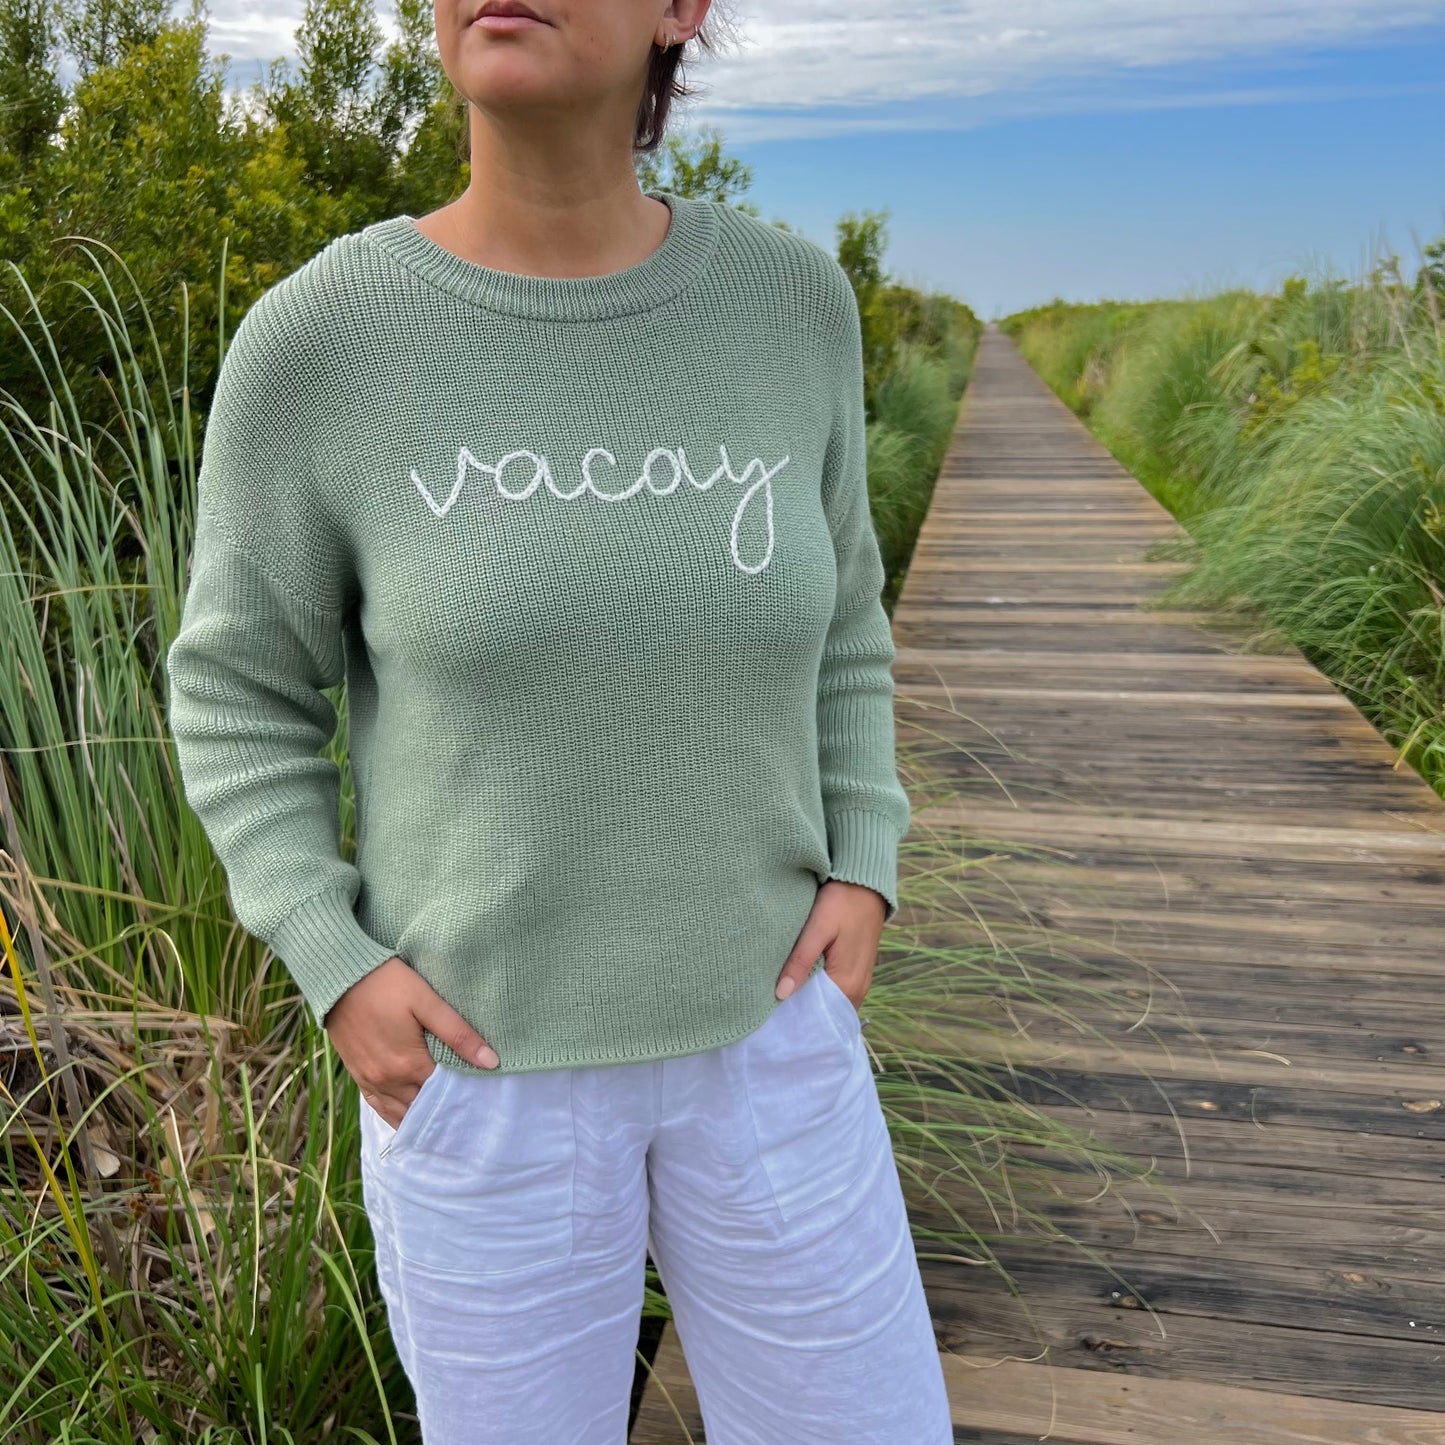 Vienna Vacay Sweater